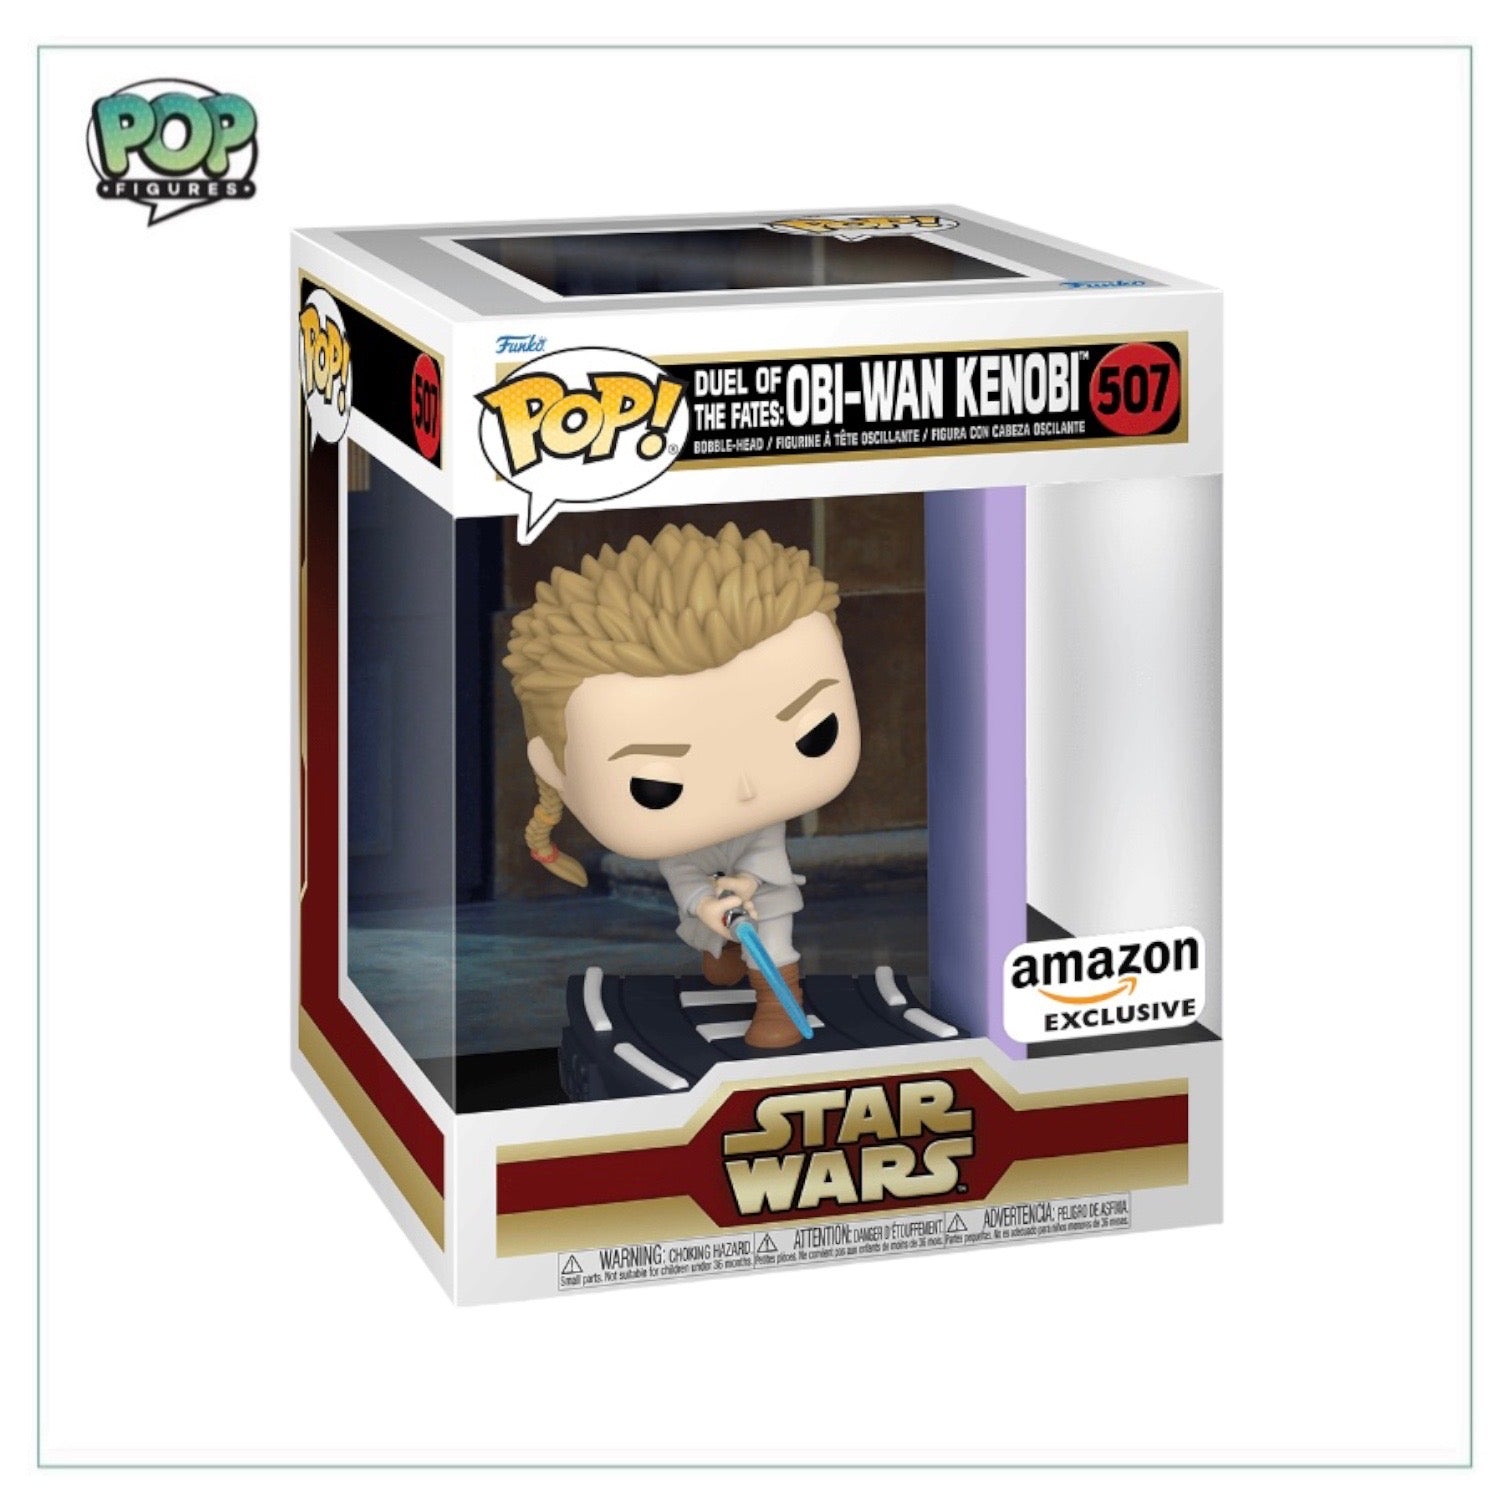 Duel of The Fates: Obi-Wan Kenobi #507 Deluxe Funko Pop! - Star Wars - Amazon Exclusive